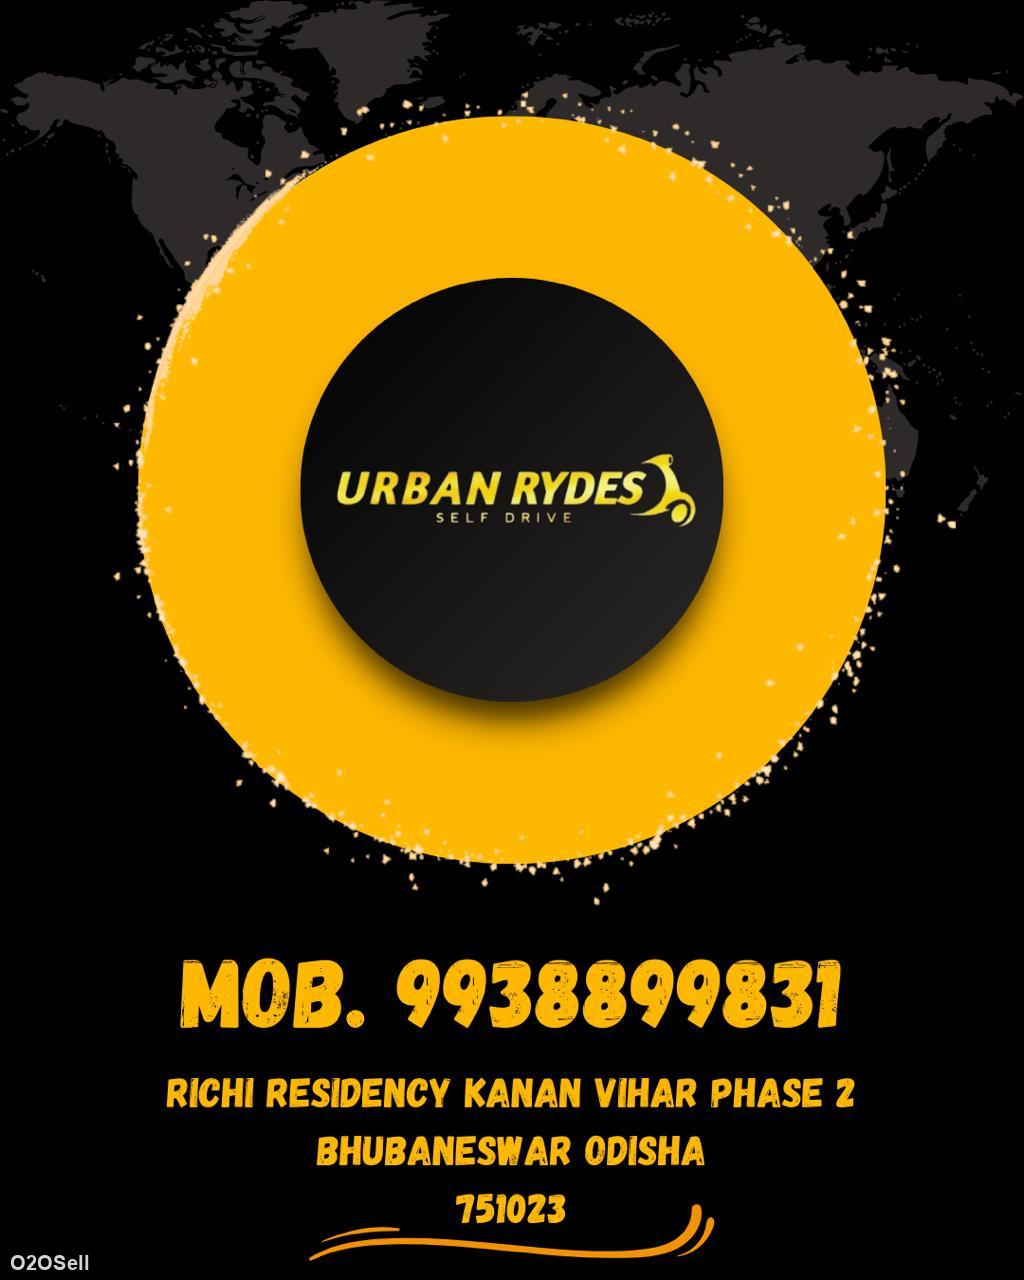 Urban rydes - Profile Image